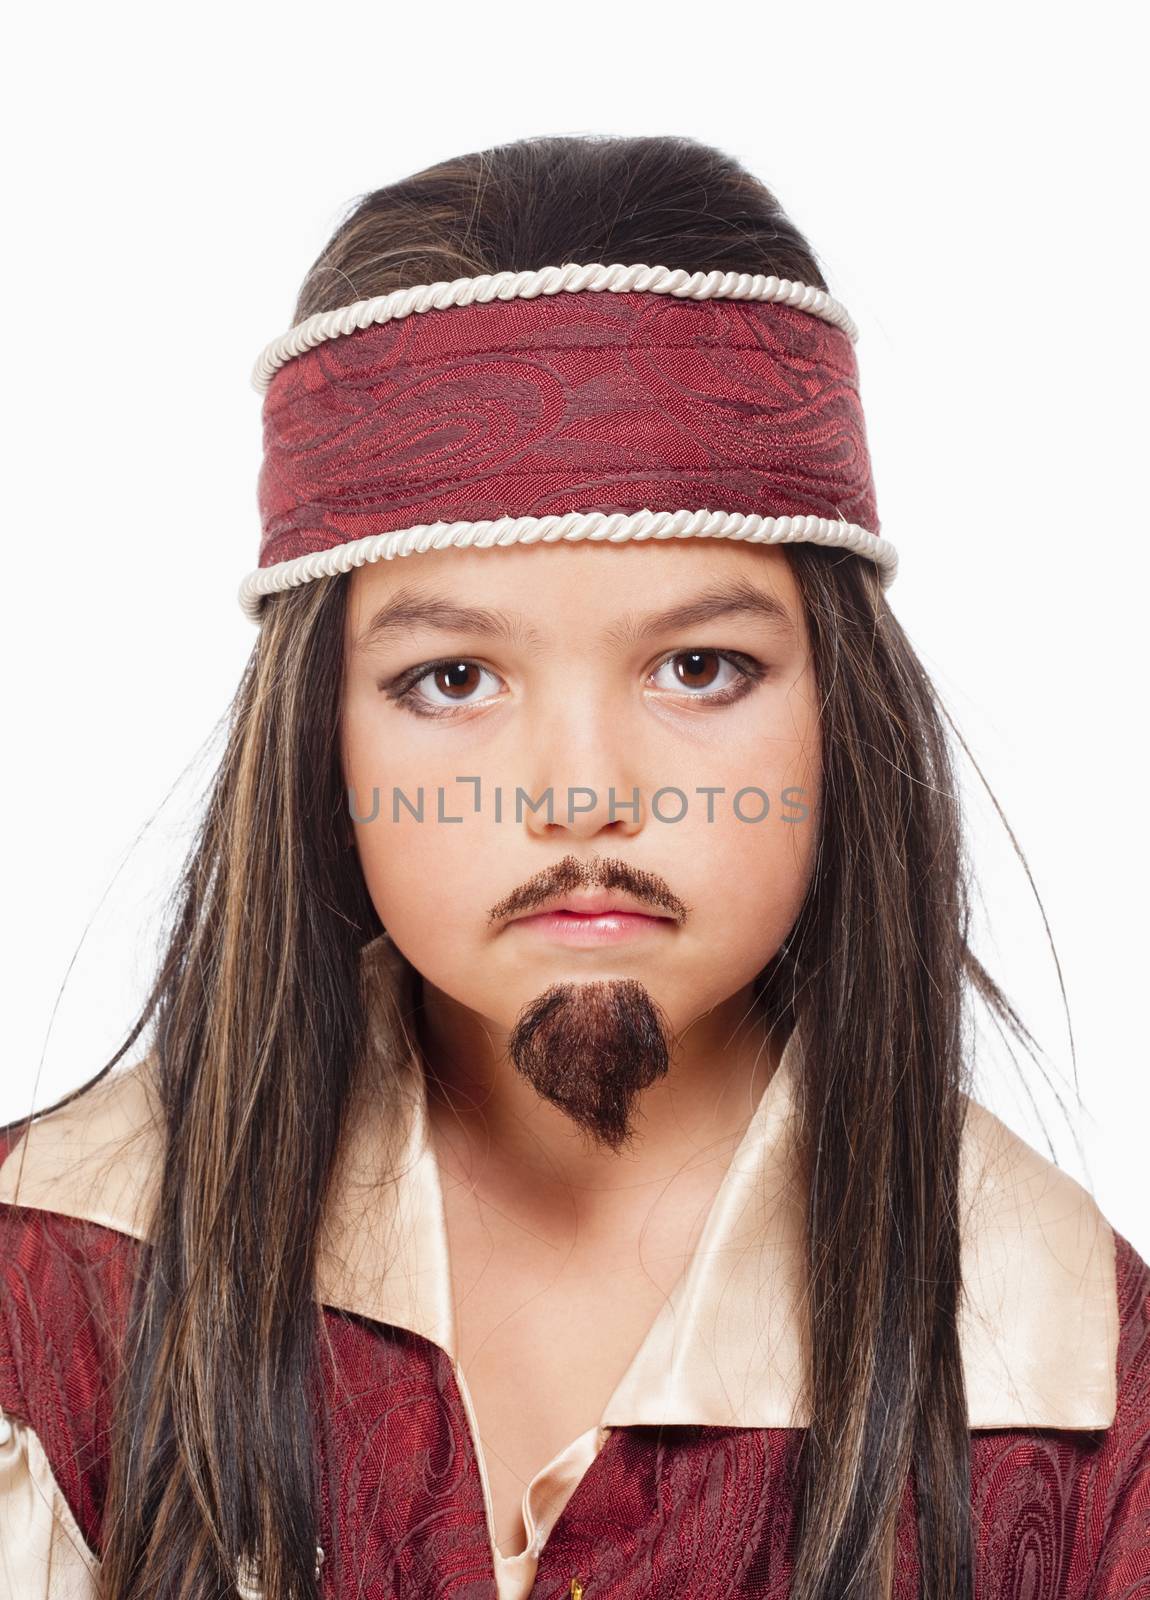 Little Boy in Wig in Pirate Costume by courtyardpix